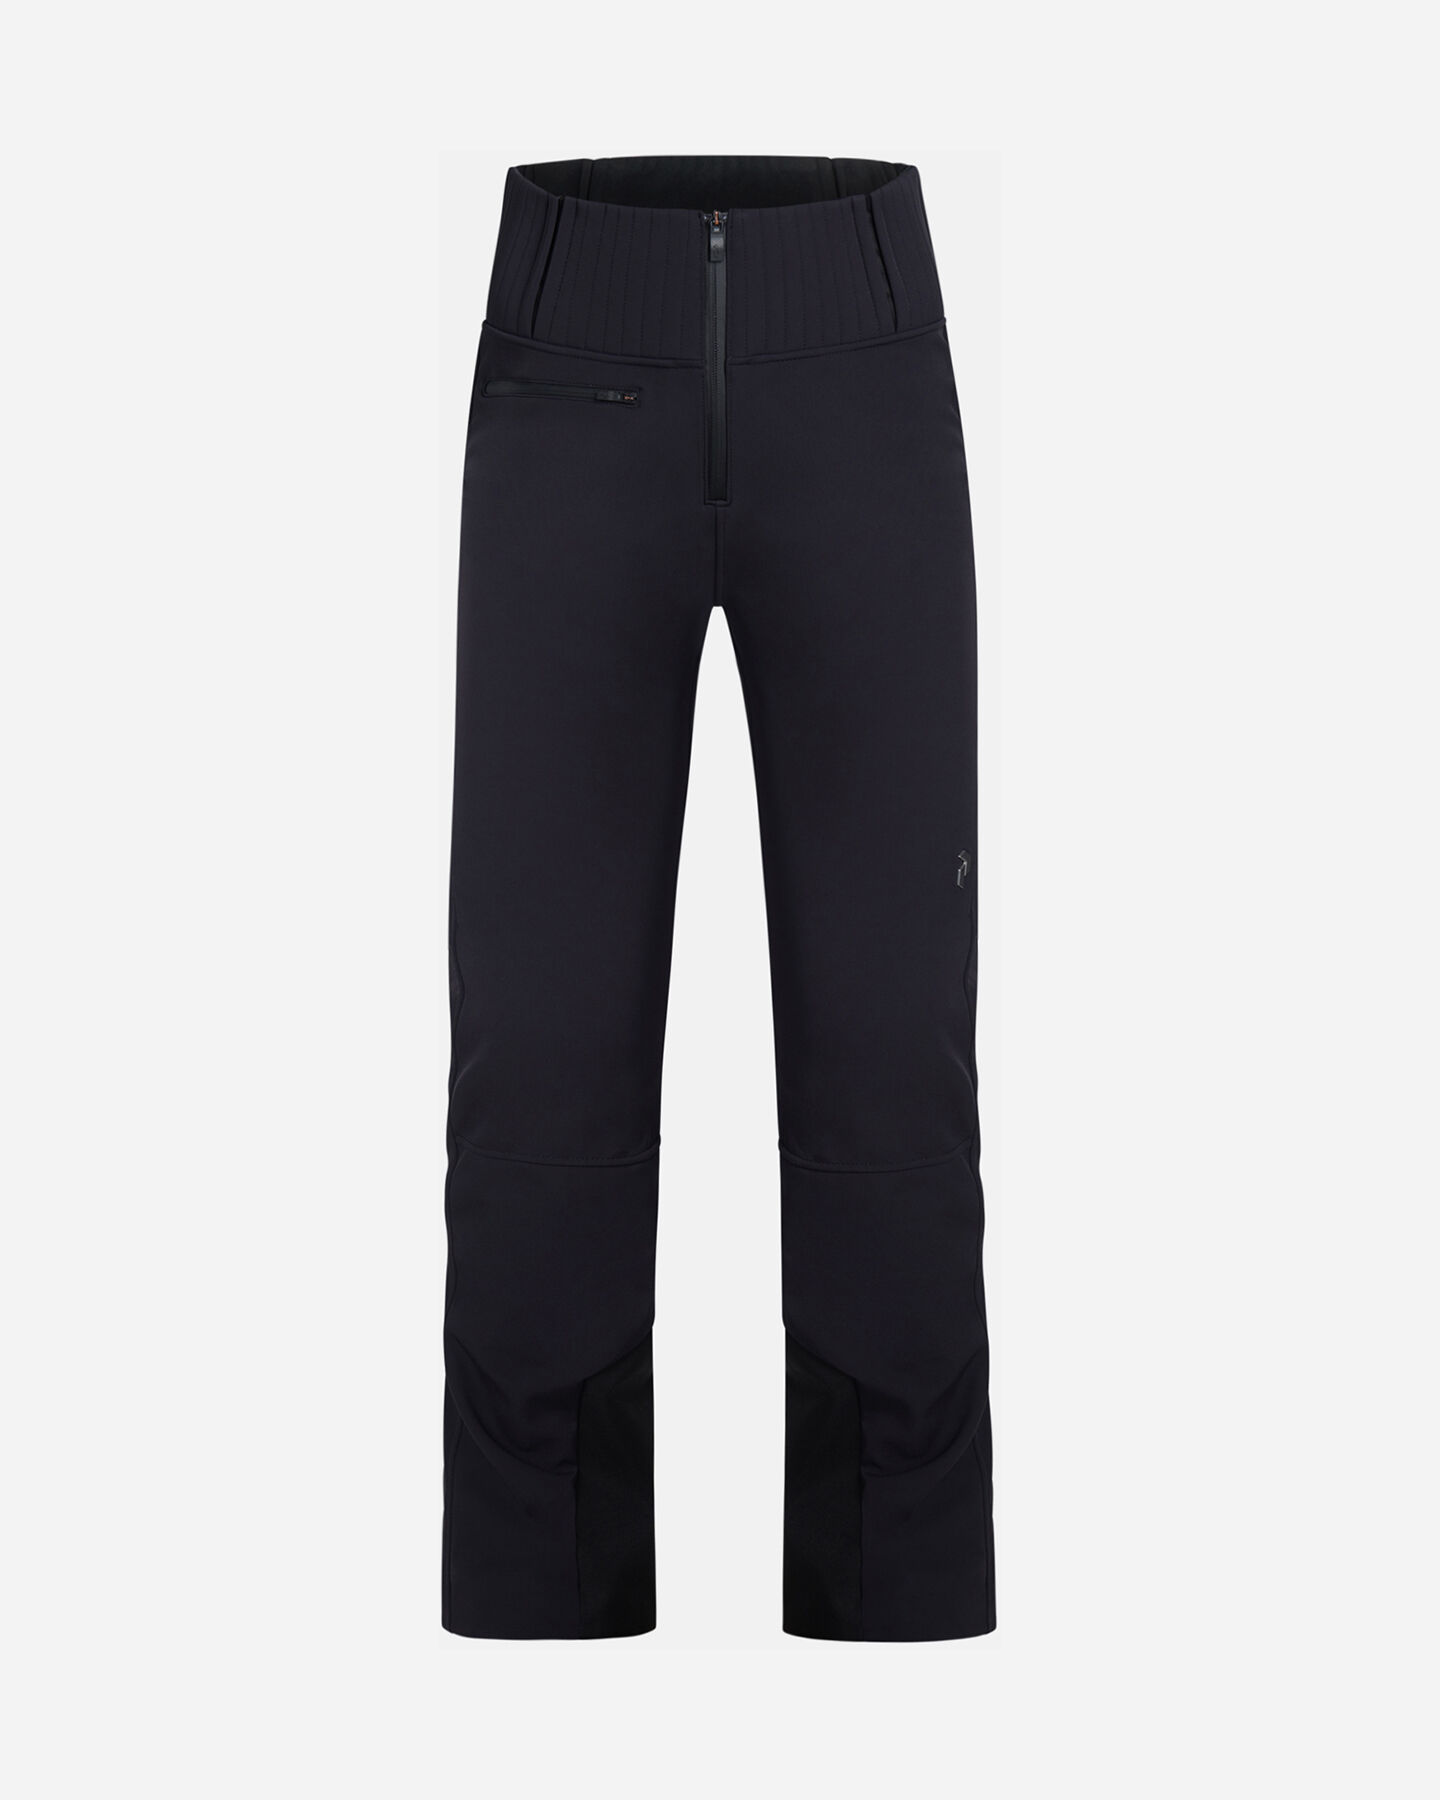  Pantalone sci PEAK PERFORMANCE HIGH STRETCH W S4099104|1|S scatto 0